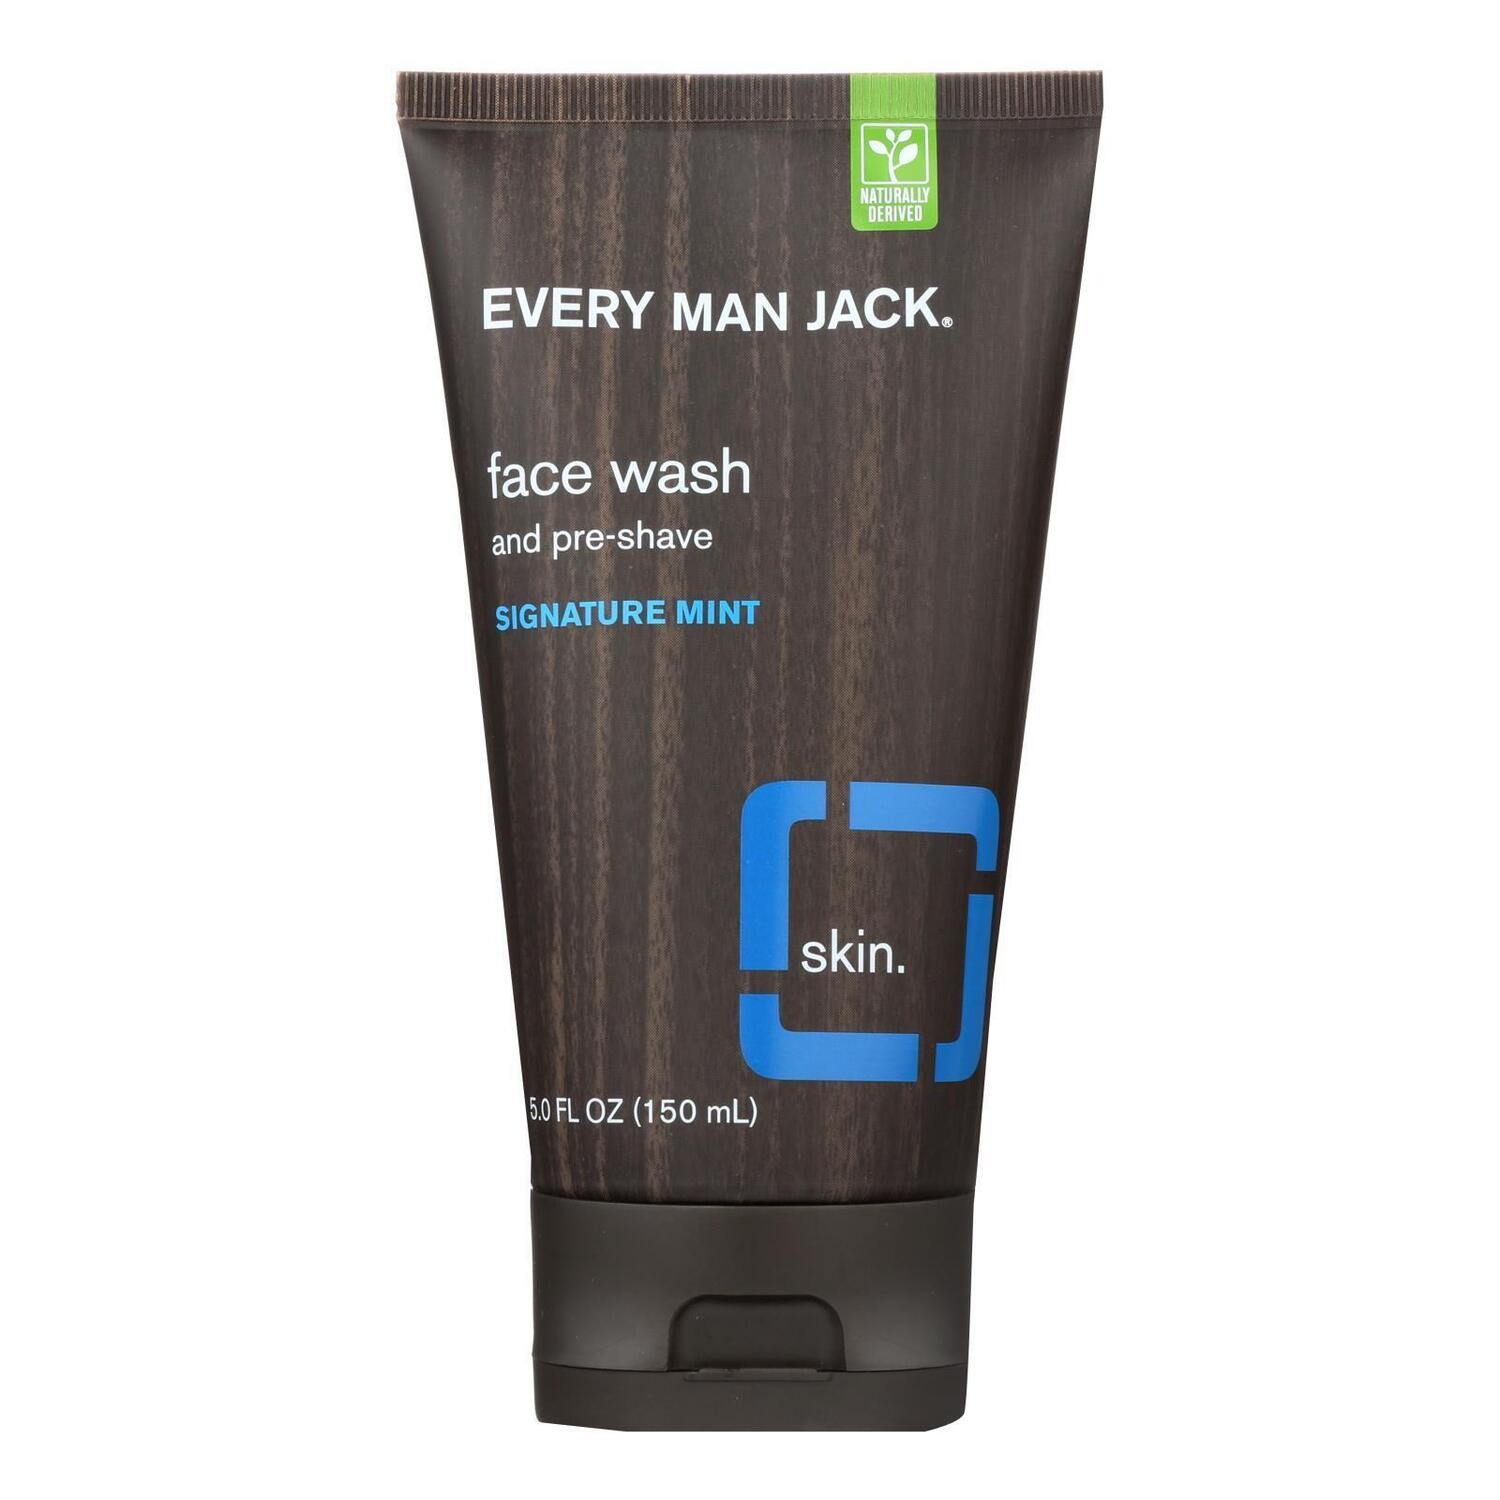 Every Man Jack Hydrating Face Wash - Face Wash - 5 FL oz.